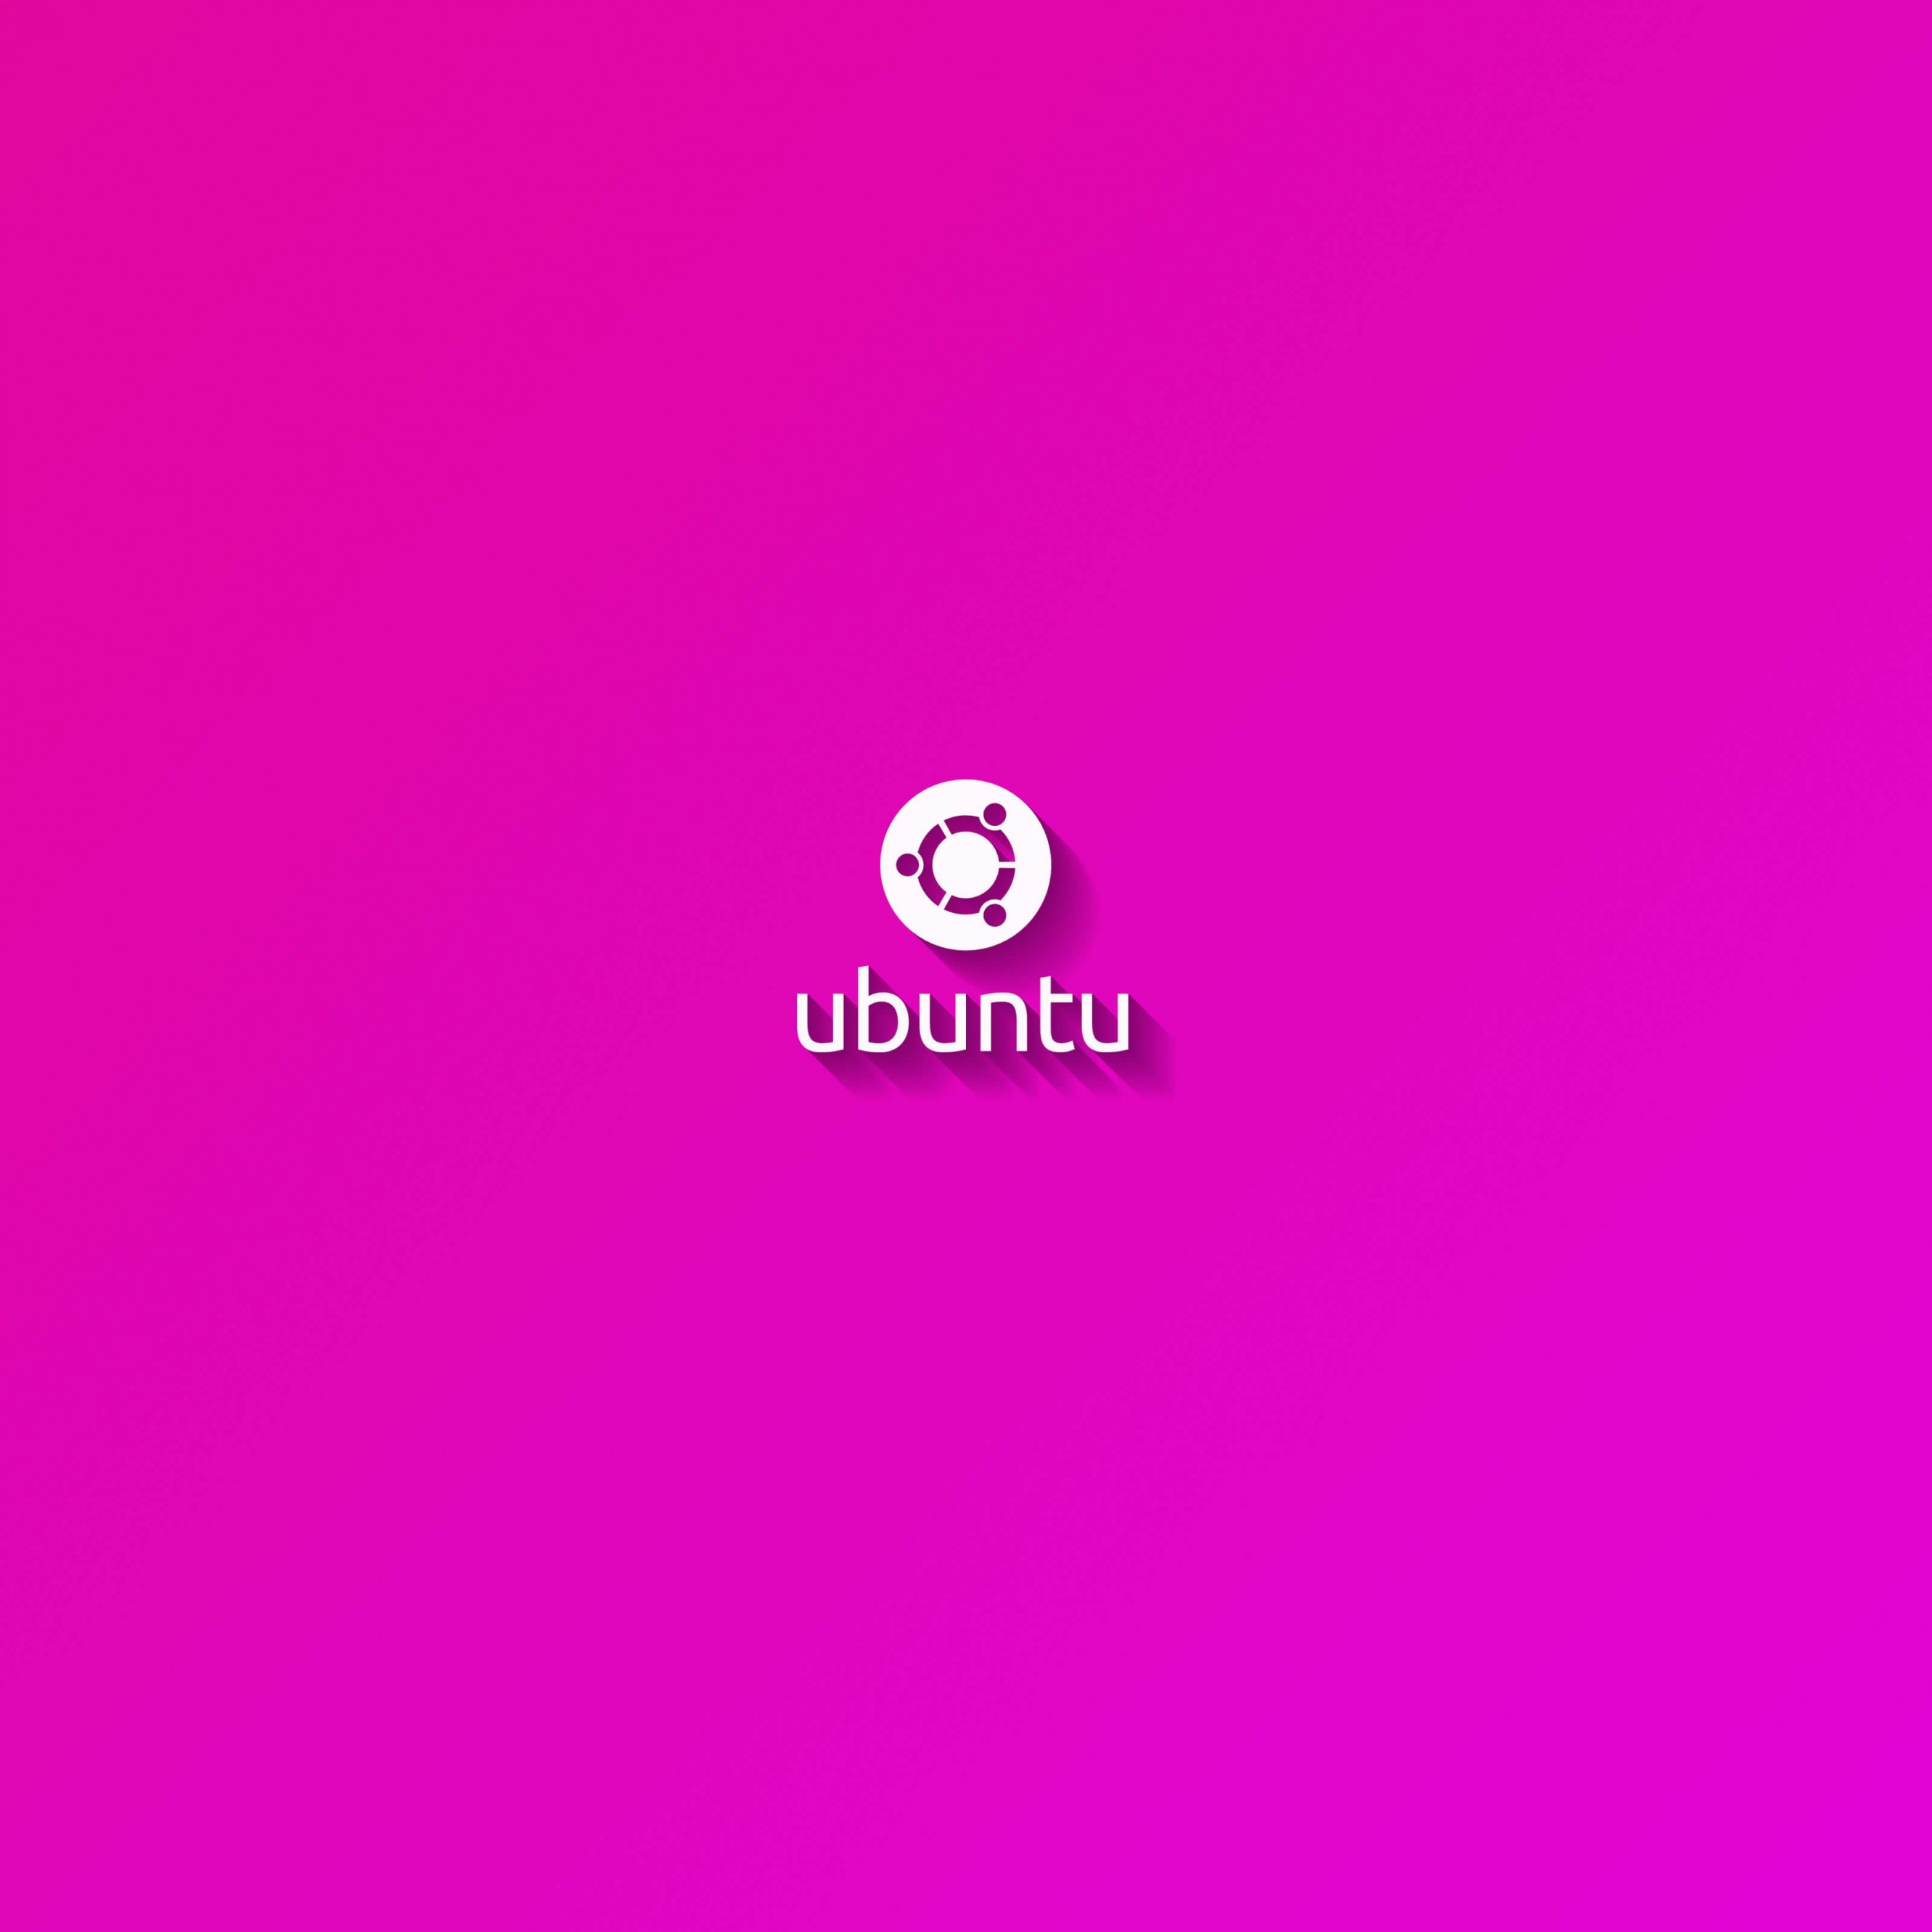 Ubuntu Flat Shadow Pink Wallpaper for Apple iPhone 6 Plus